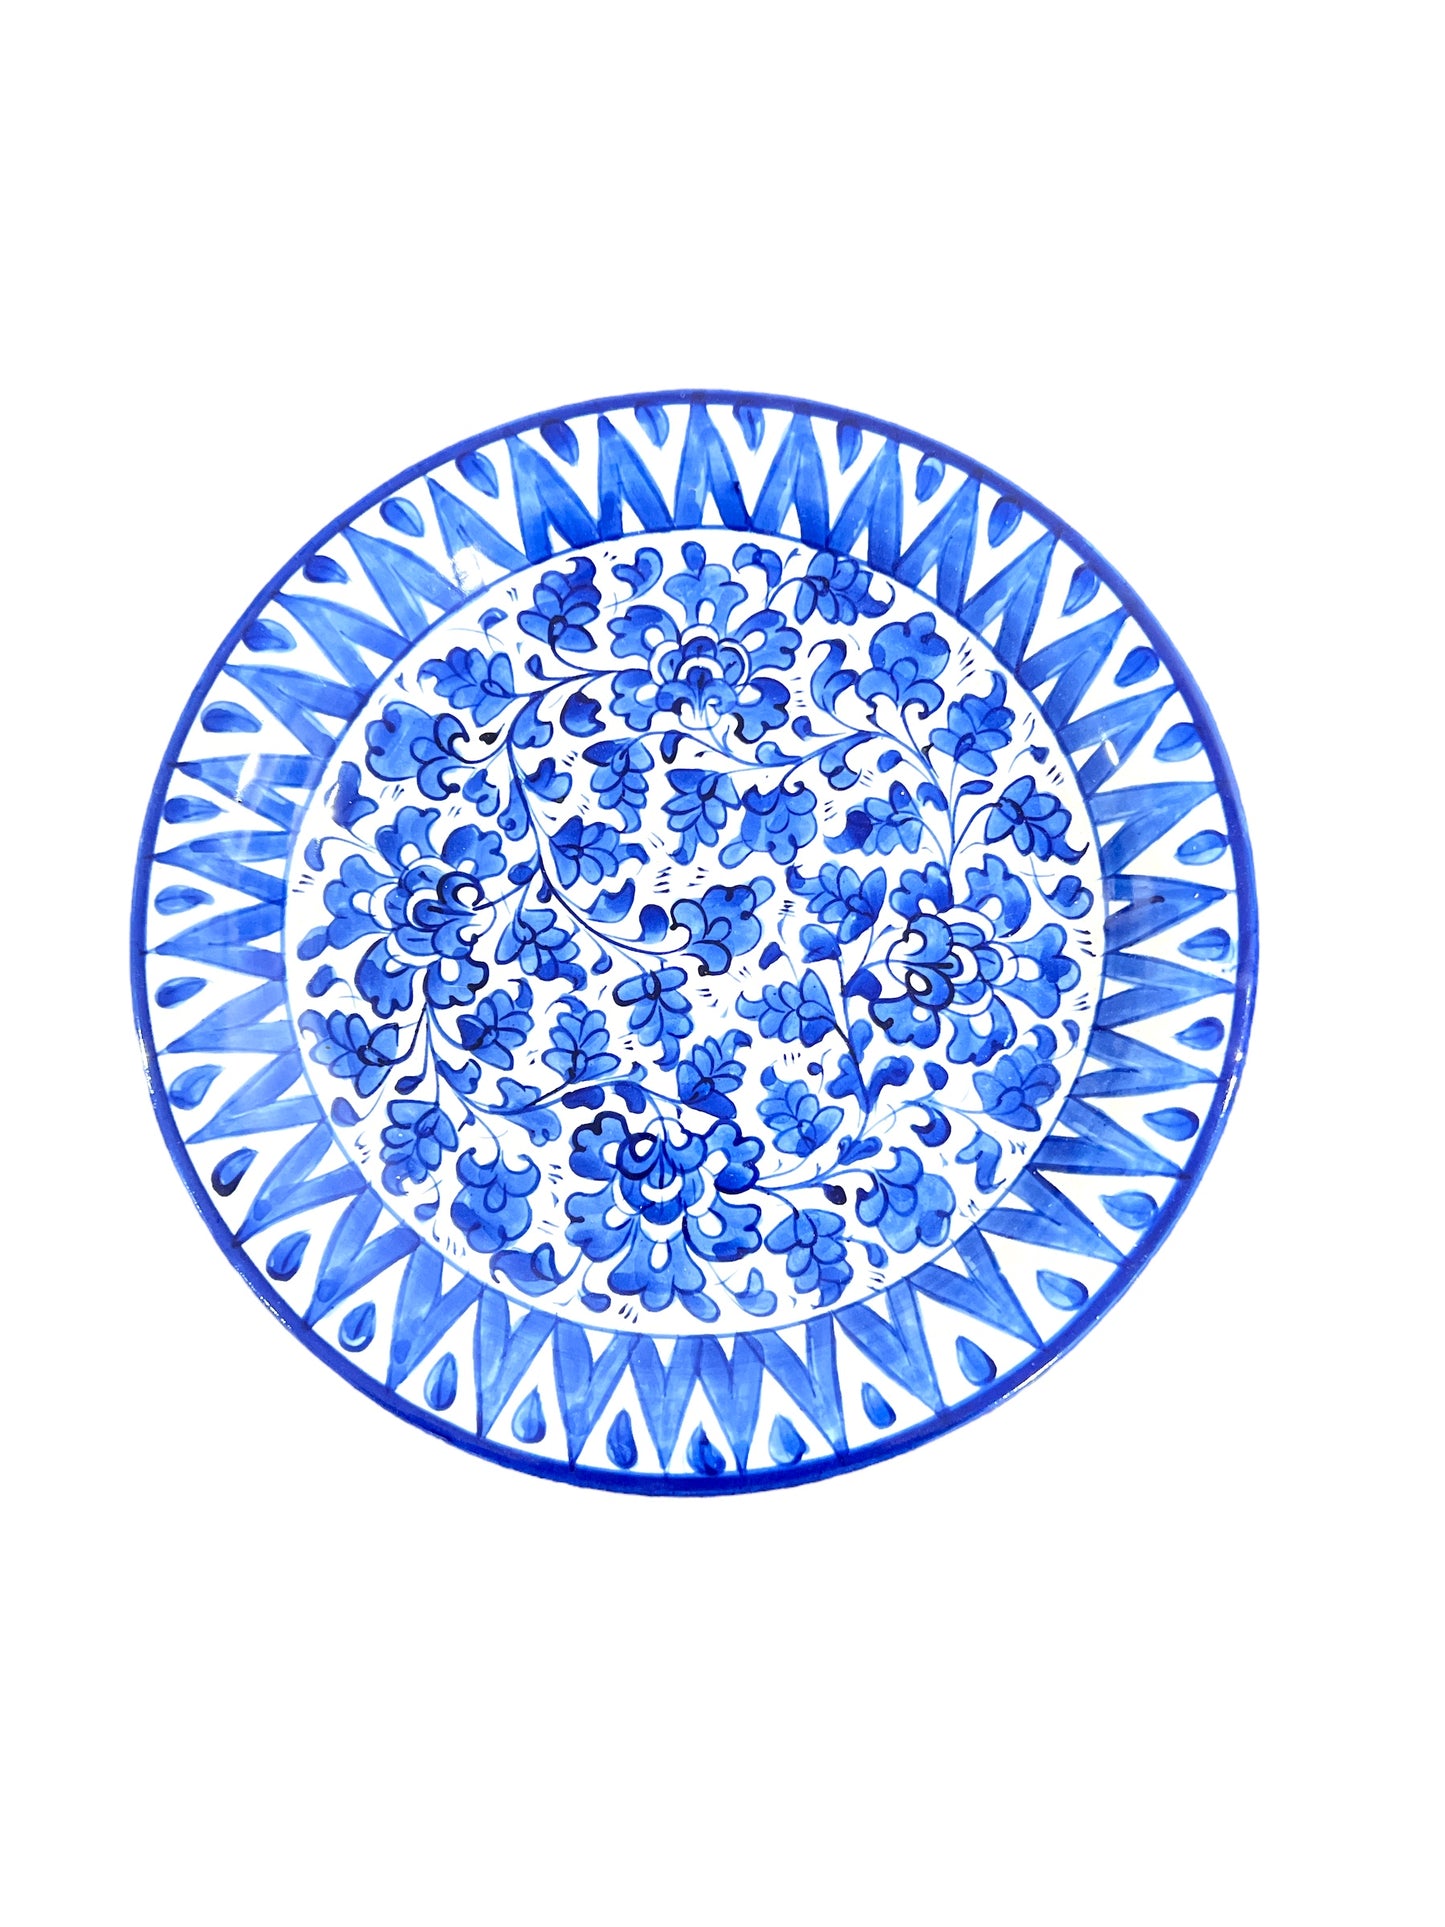 Blue Pottery Ceramic Dinner Plate - Blue Leaf Triangle Design